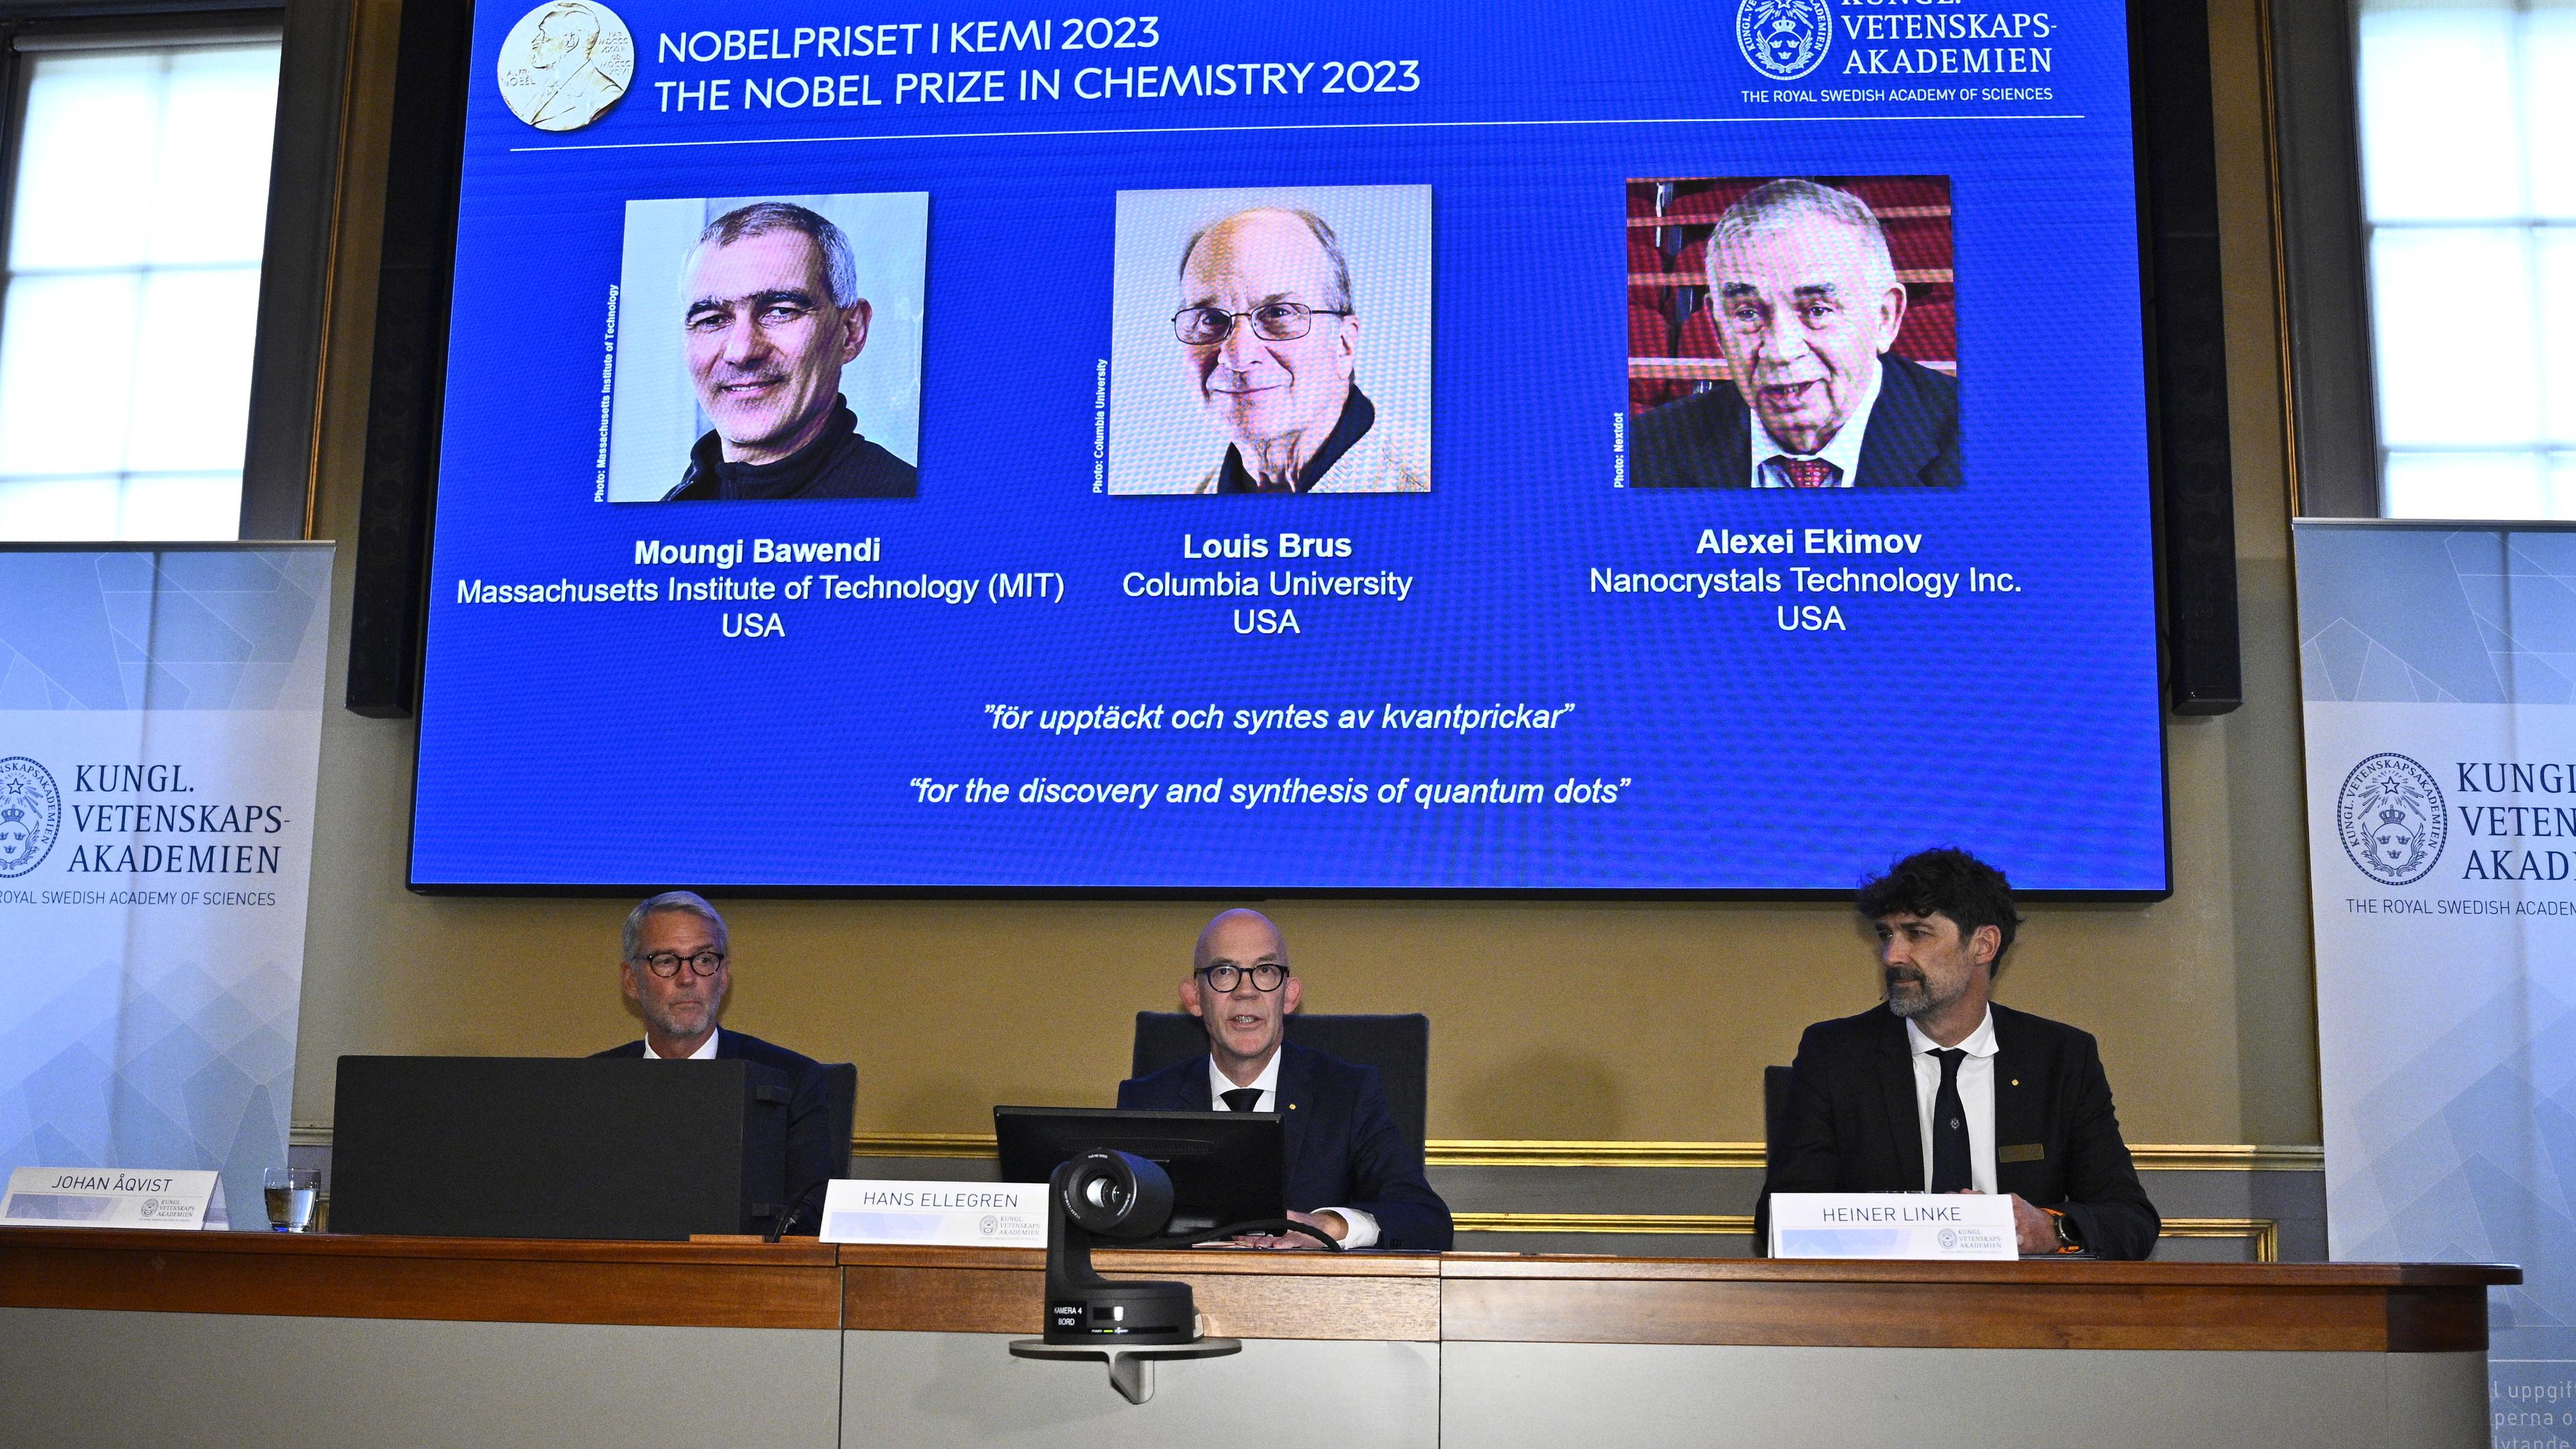 Verkündung des Chemie-Nobelpreises.Publikum sieht auf blaue Leinwand